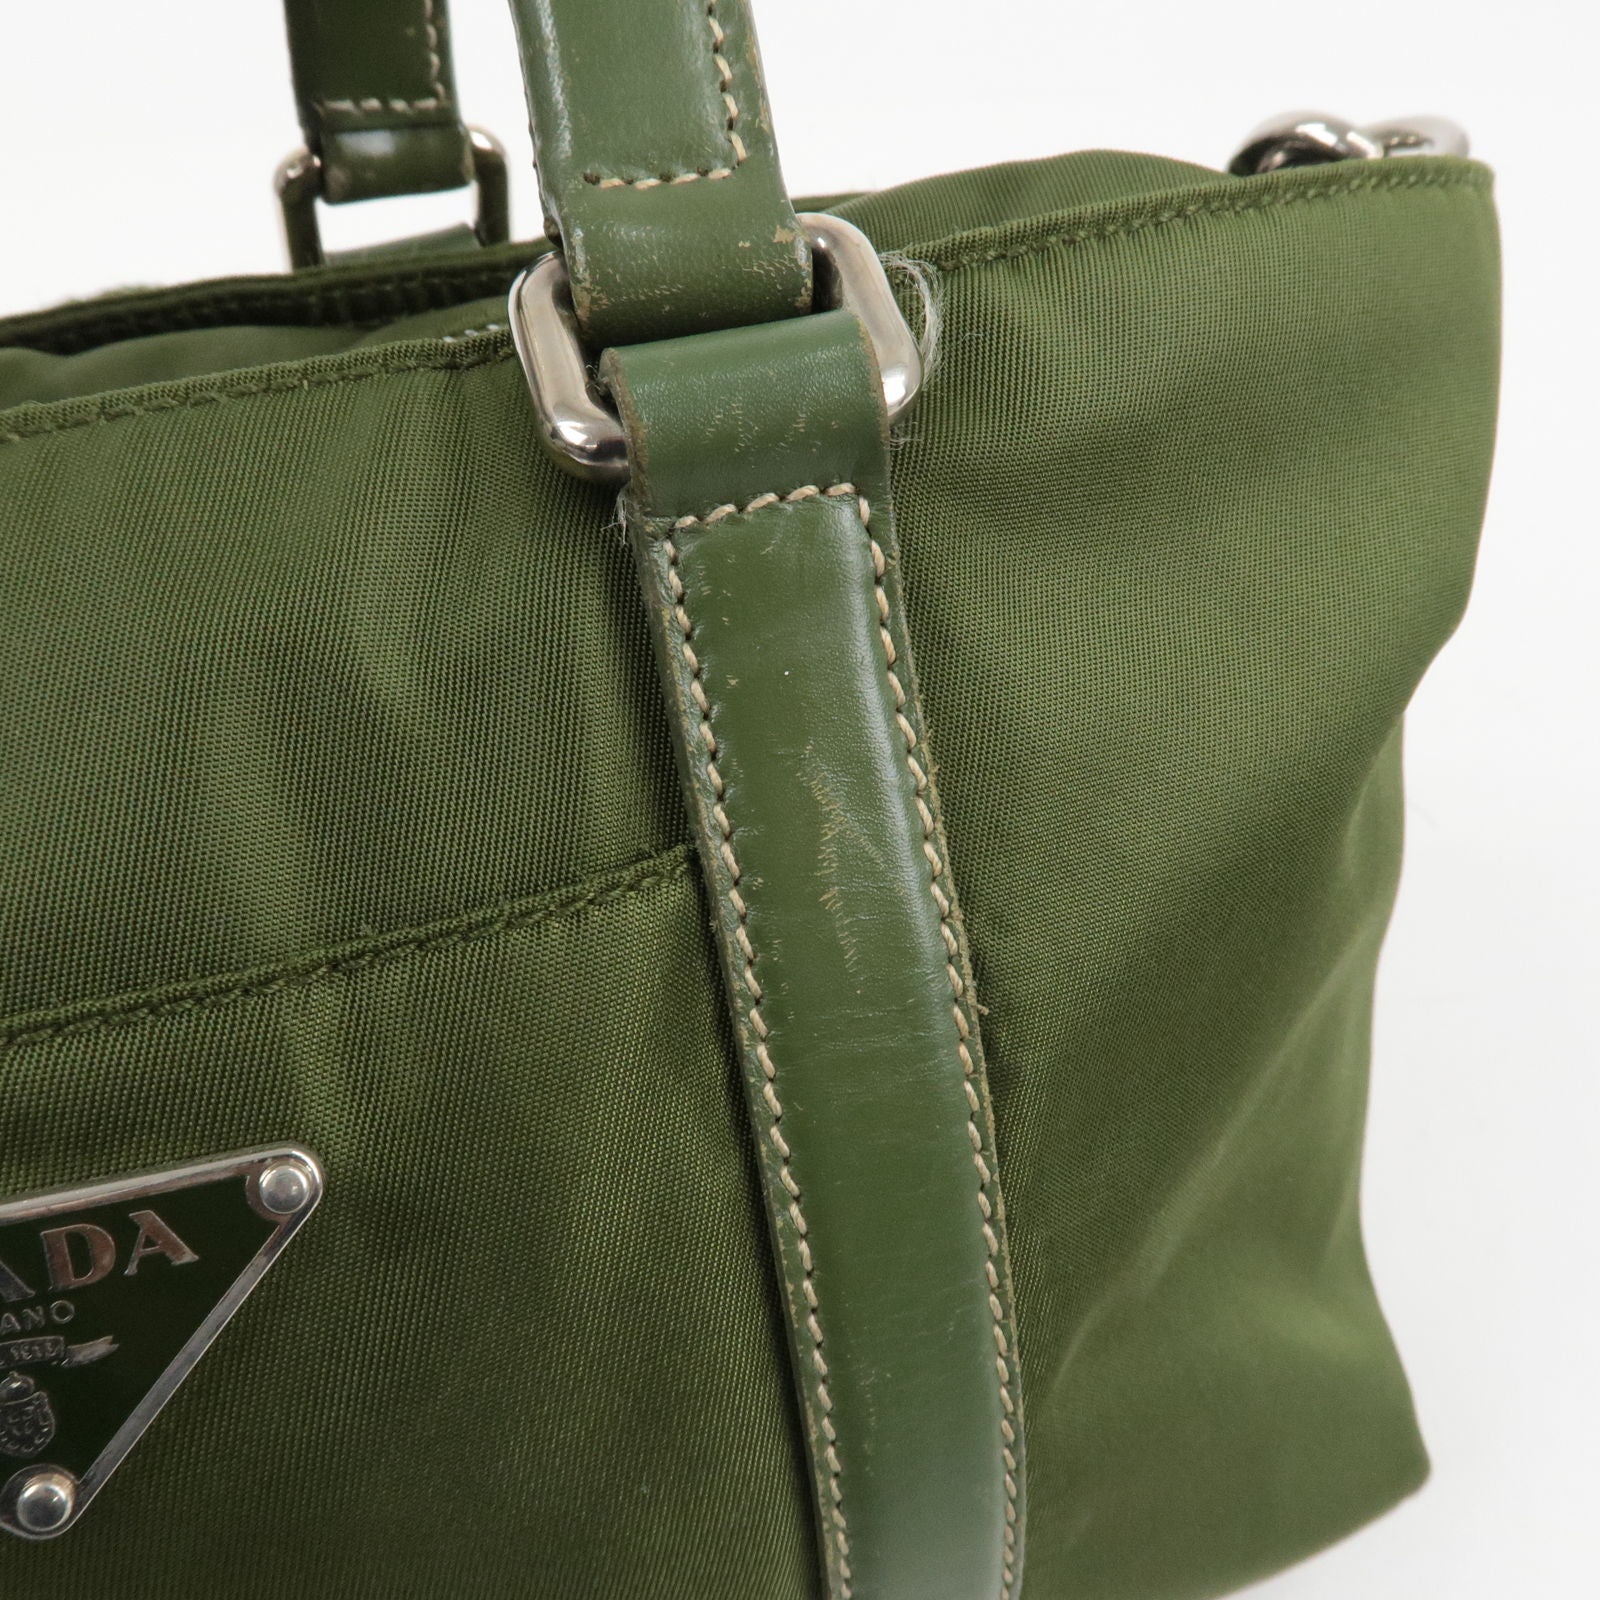 Nylon - Hand - PRADA - Green - Bag - Leather - Prada Toiletry Bags for Men  - 2Way - BN1052 – dct - Bag - ep_vintage luxury Store